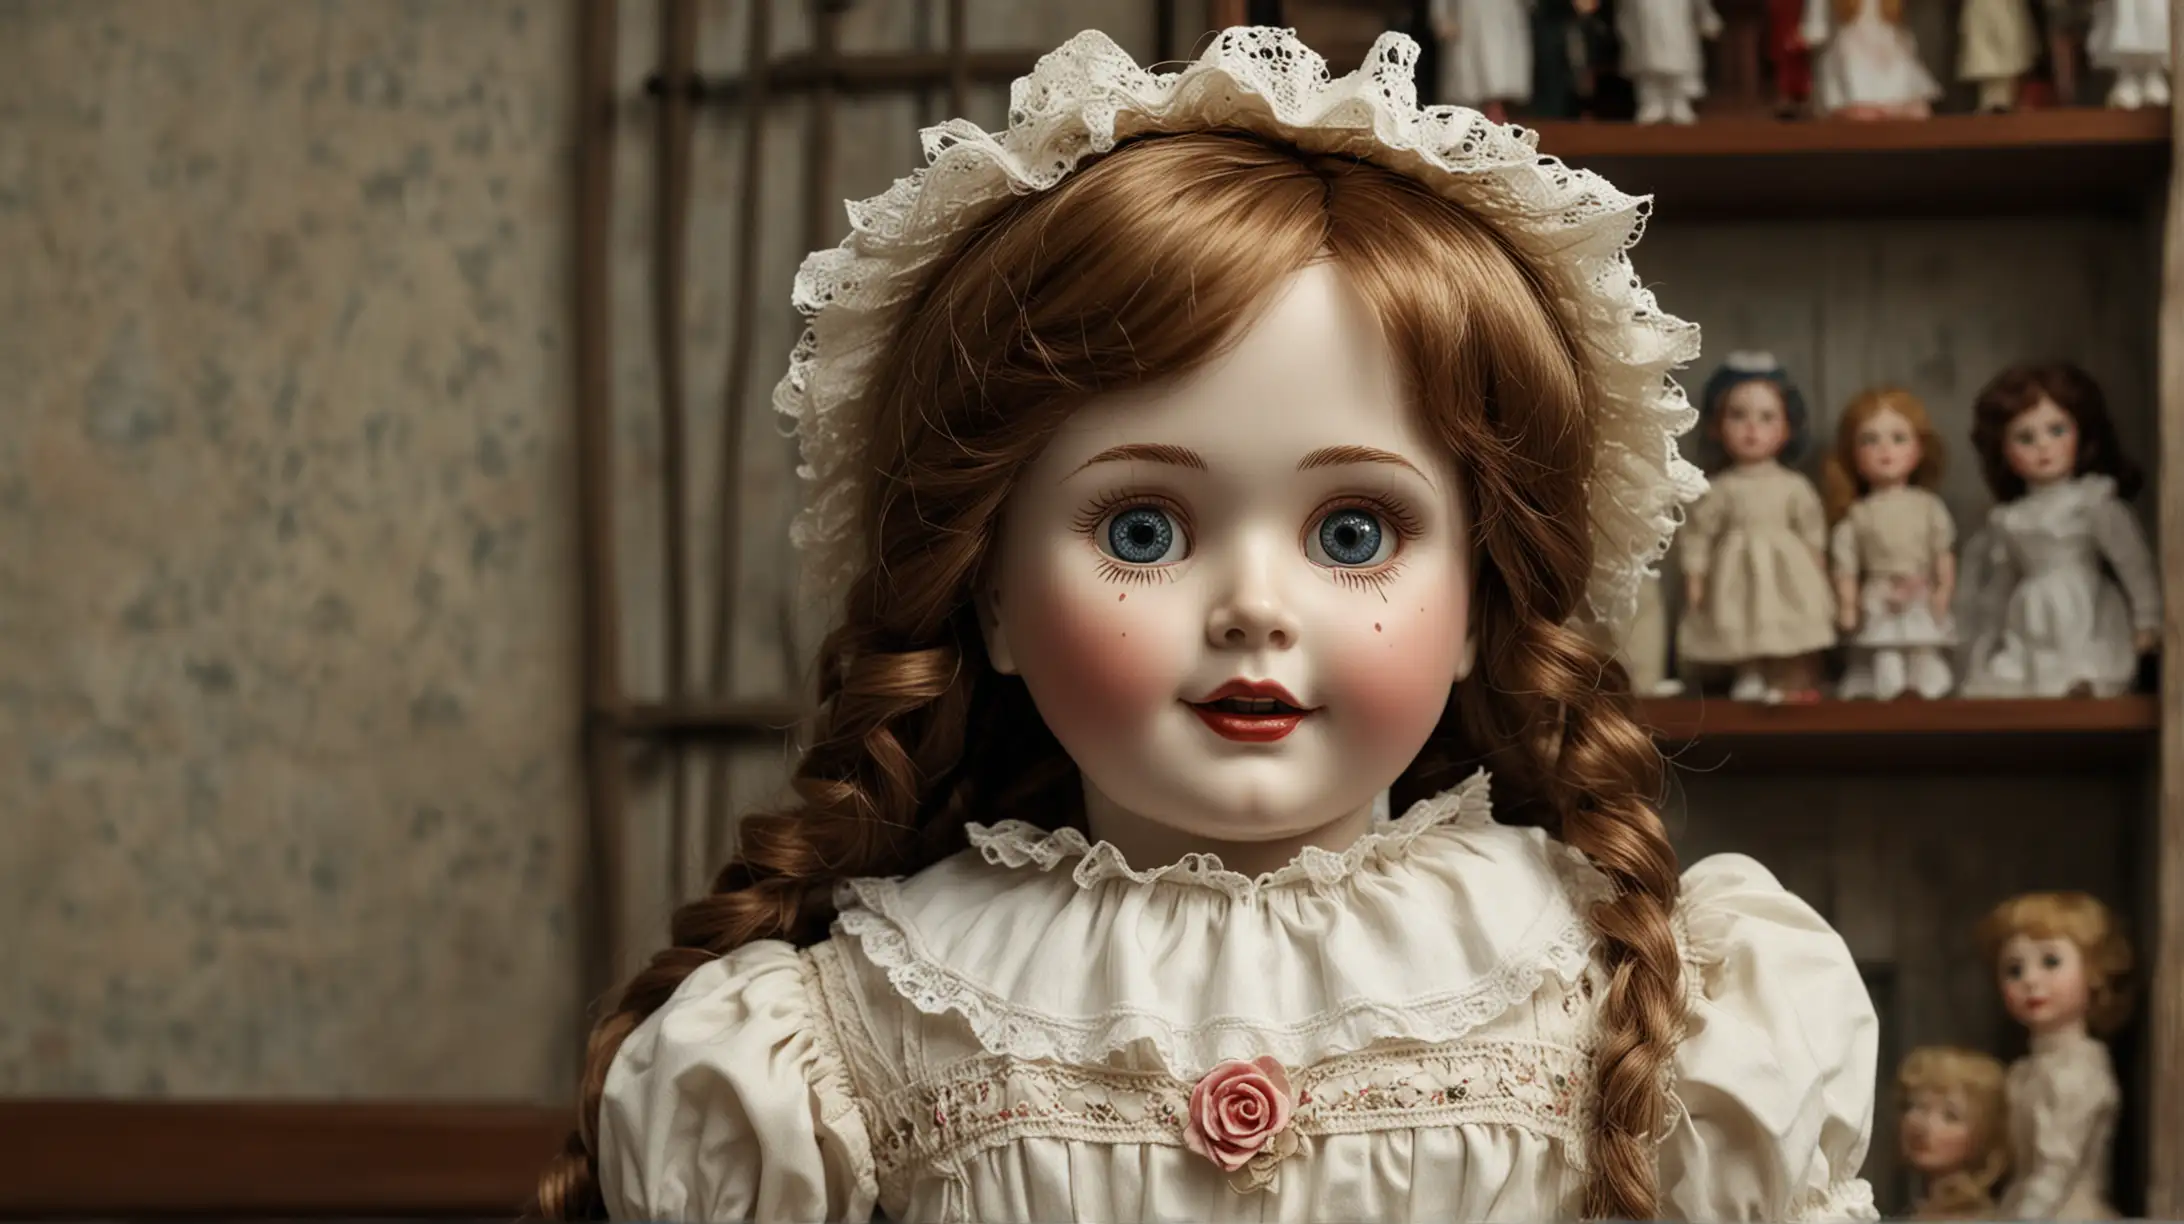 Malevolent Entity Resides in Porcelain Doll Named Annabelle